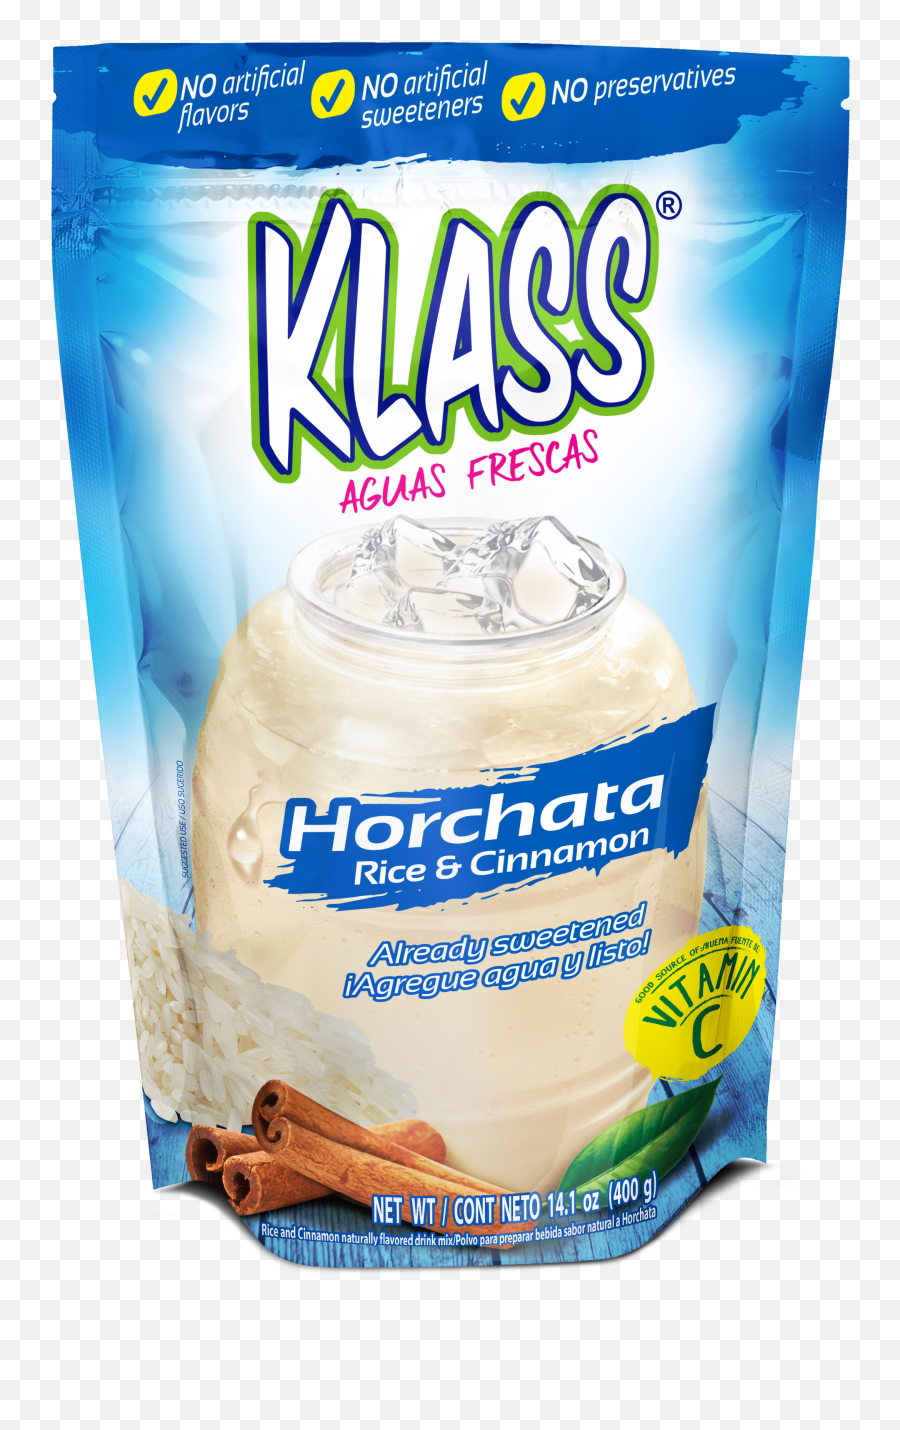 Klass Horchata Naturally Flavored Drink - Klass Horchata Png,Horchata Png